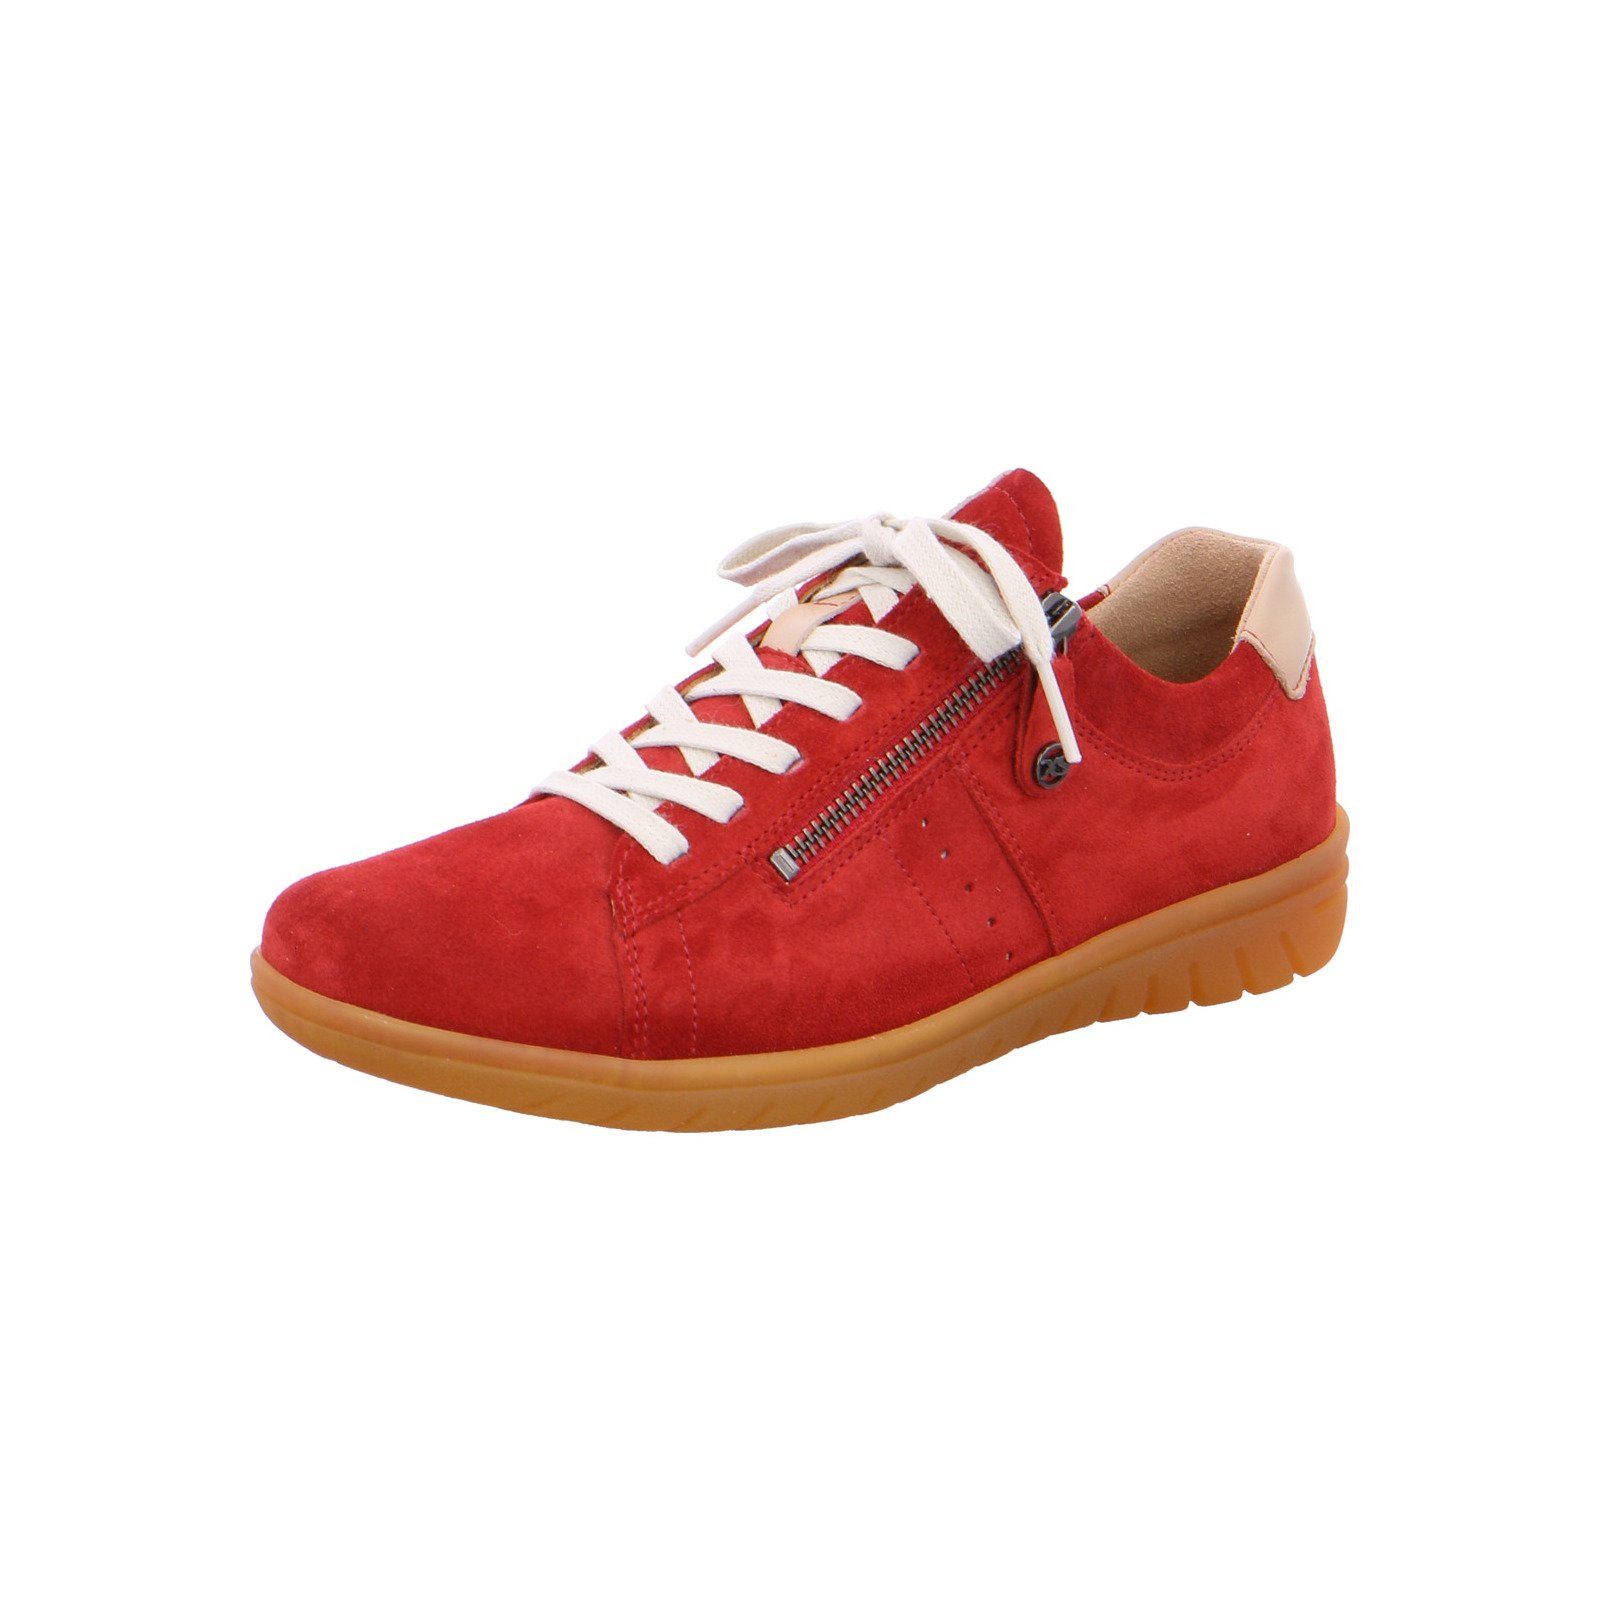 Hartjes XS Casual - Damen Schuhe Schnürschuh rot